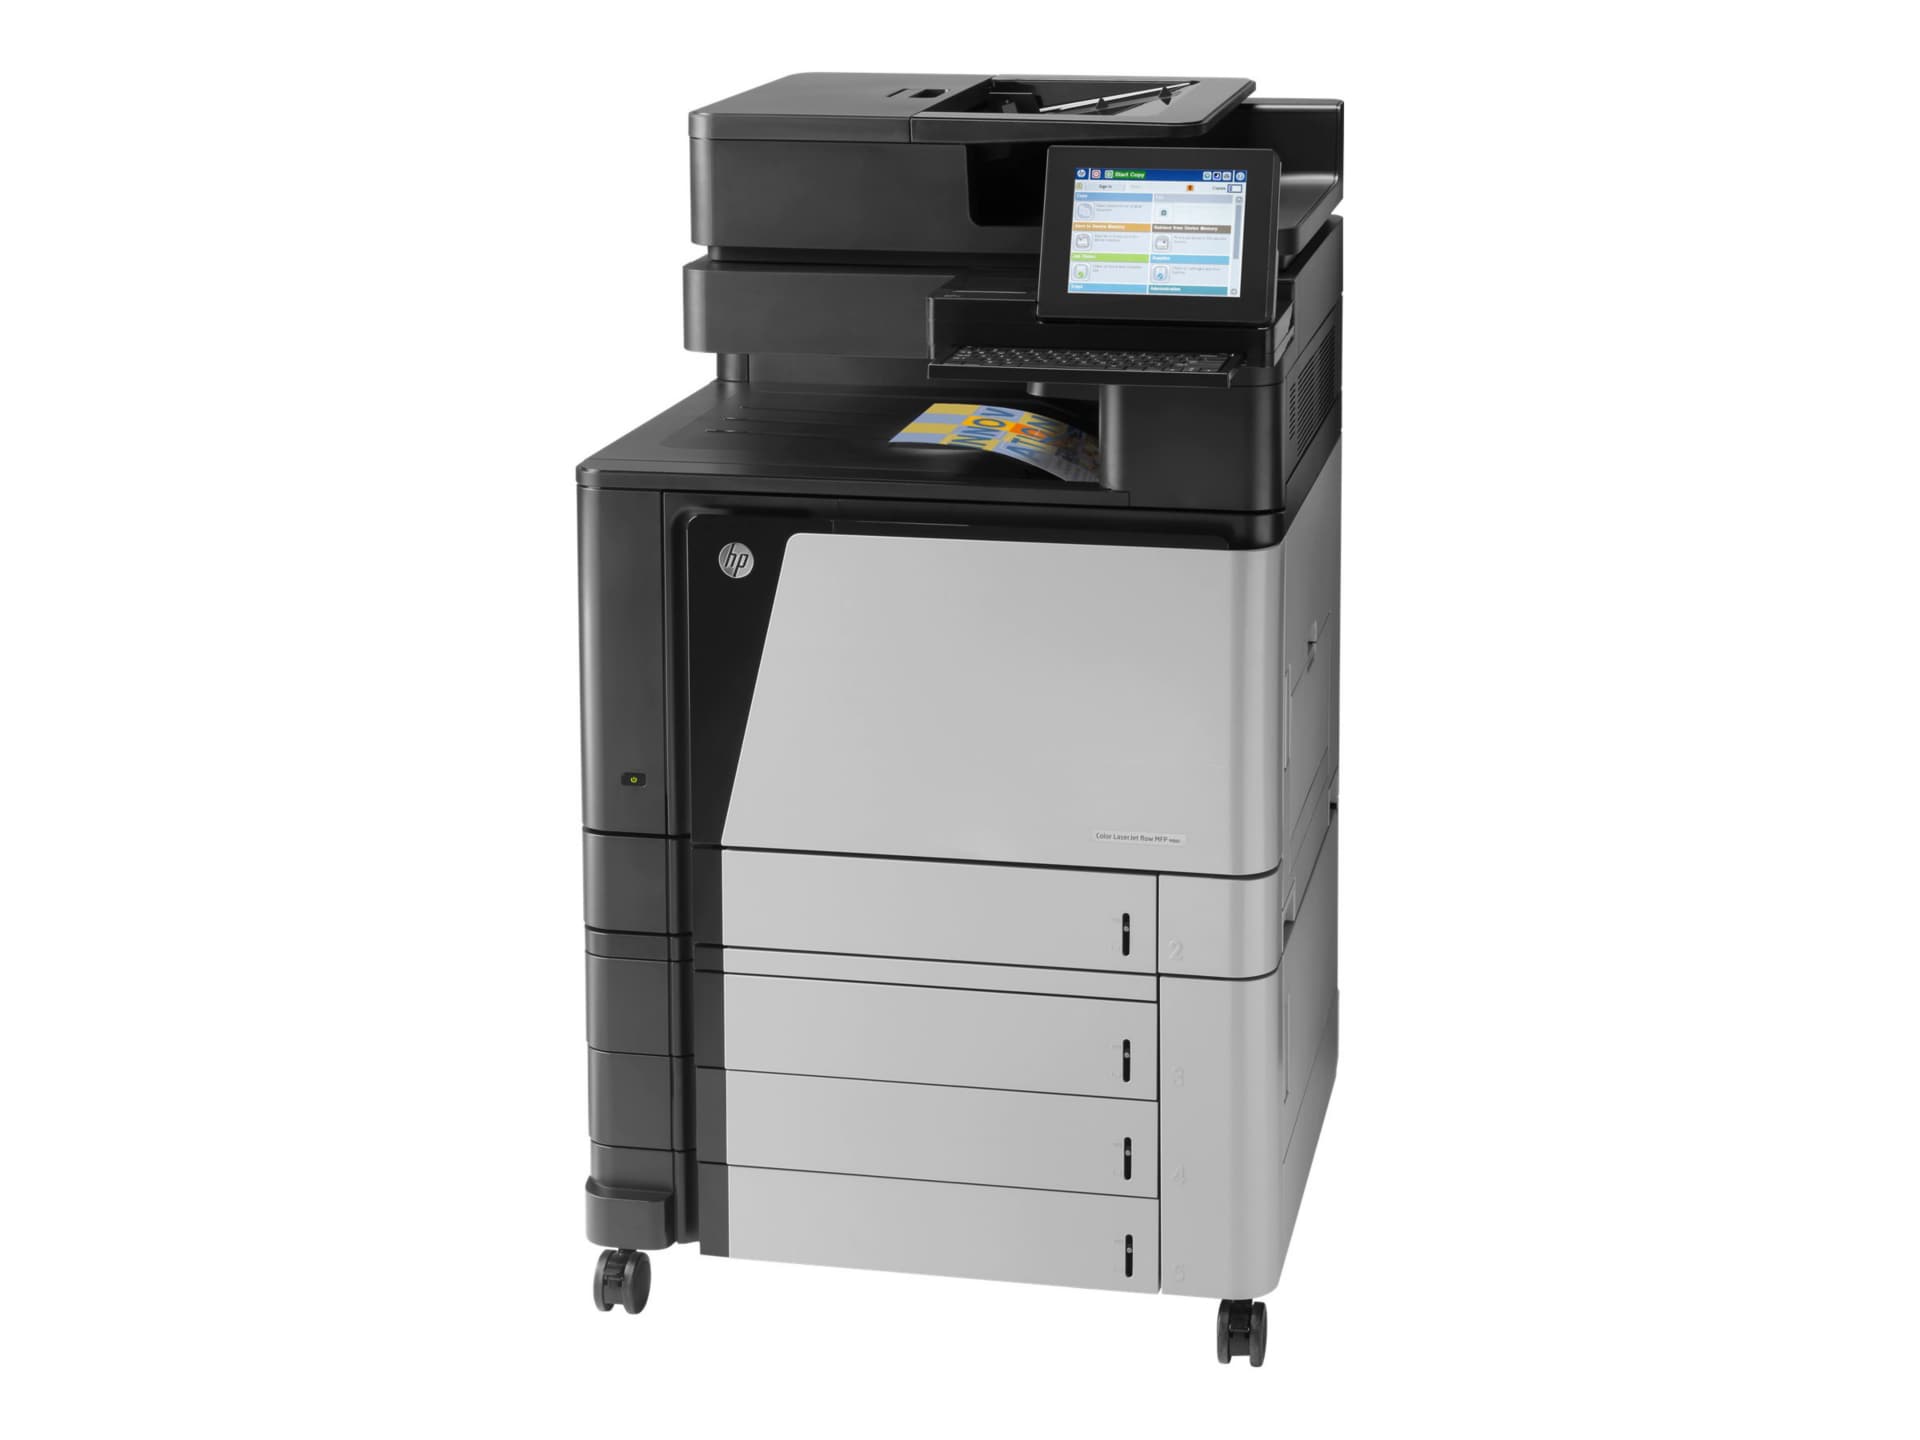 HP LaserJet M880Z Laser Multifunction Printer-Color-Copier/Fax/Scanner-46 ppm Mono/46 ppm Color Print-1200x1200